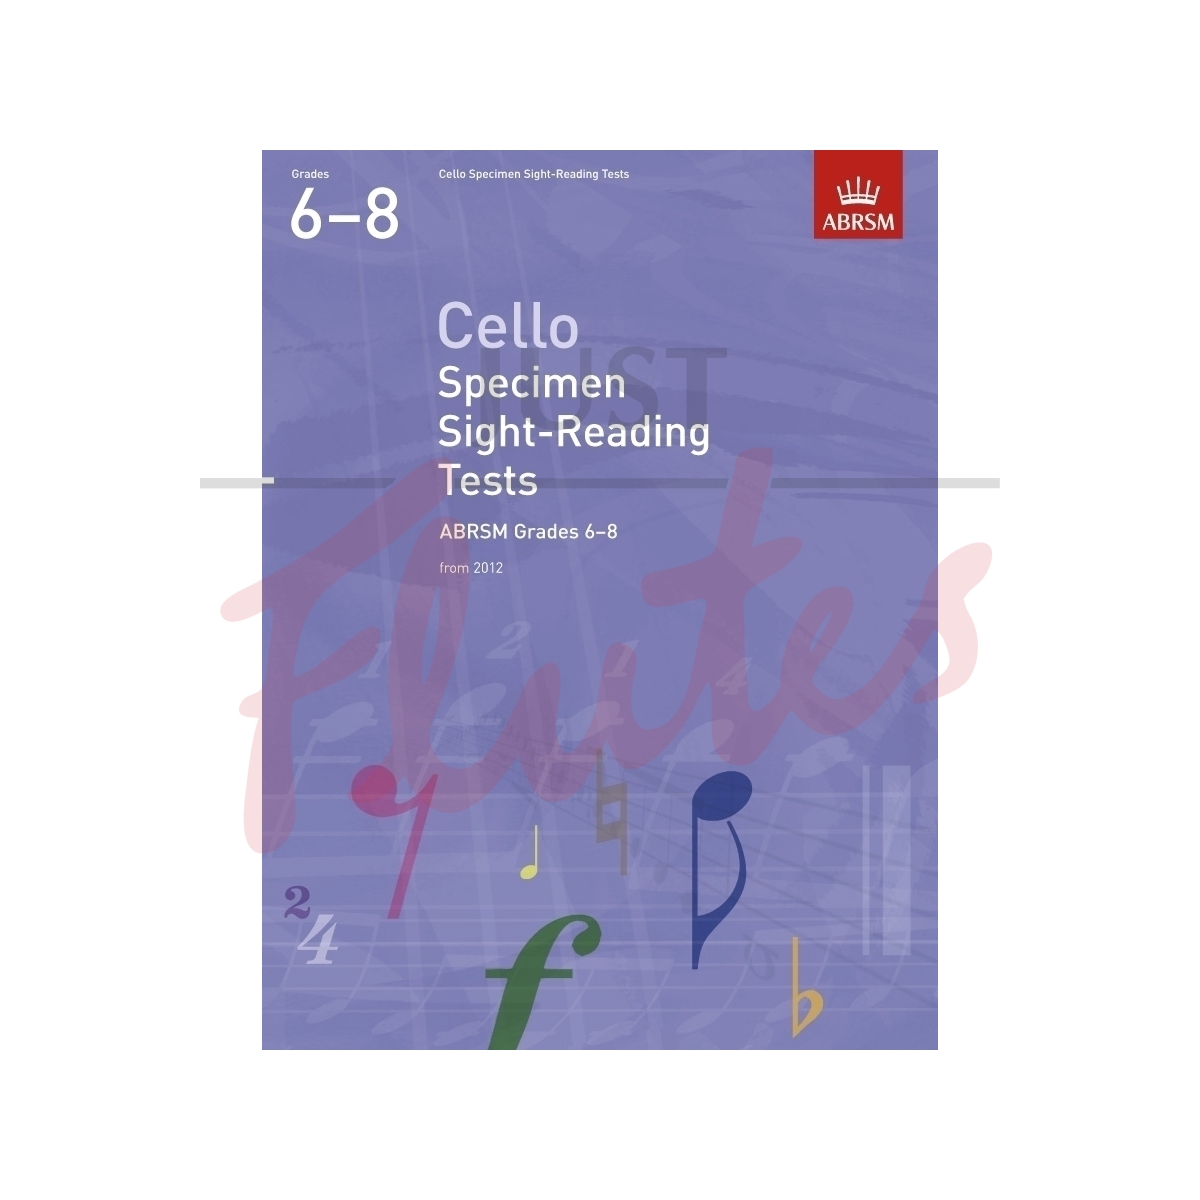 Specimen Sight-Reading Tests for Cello Grades 6-8